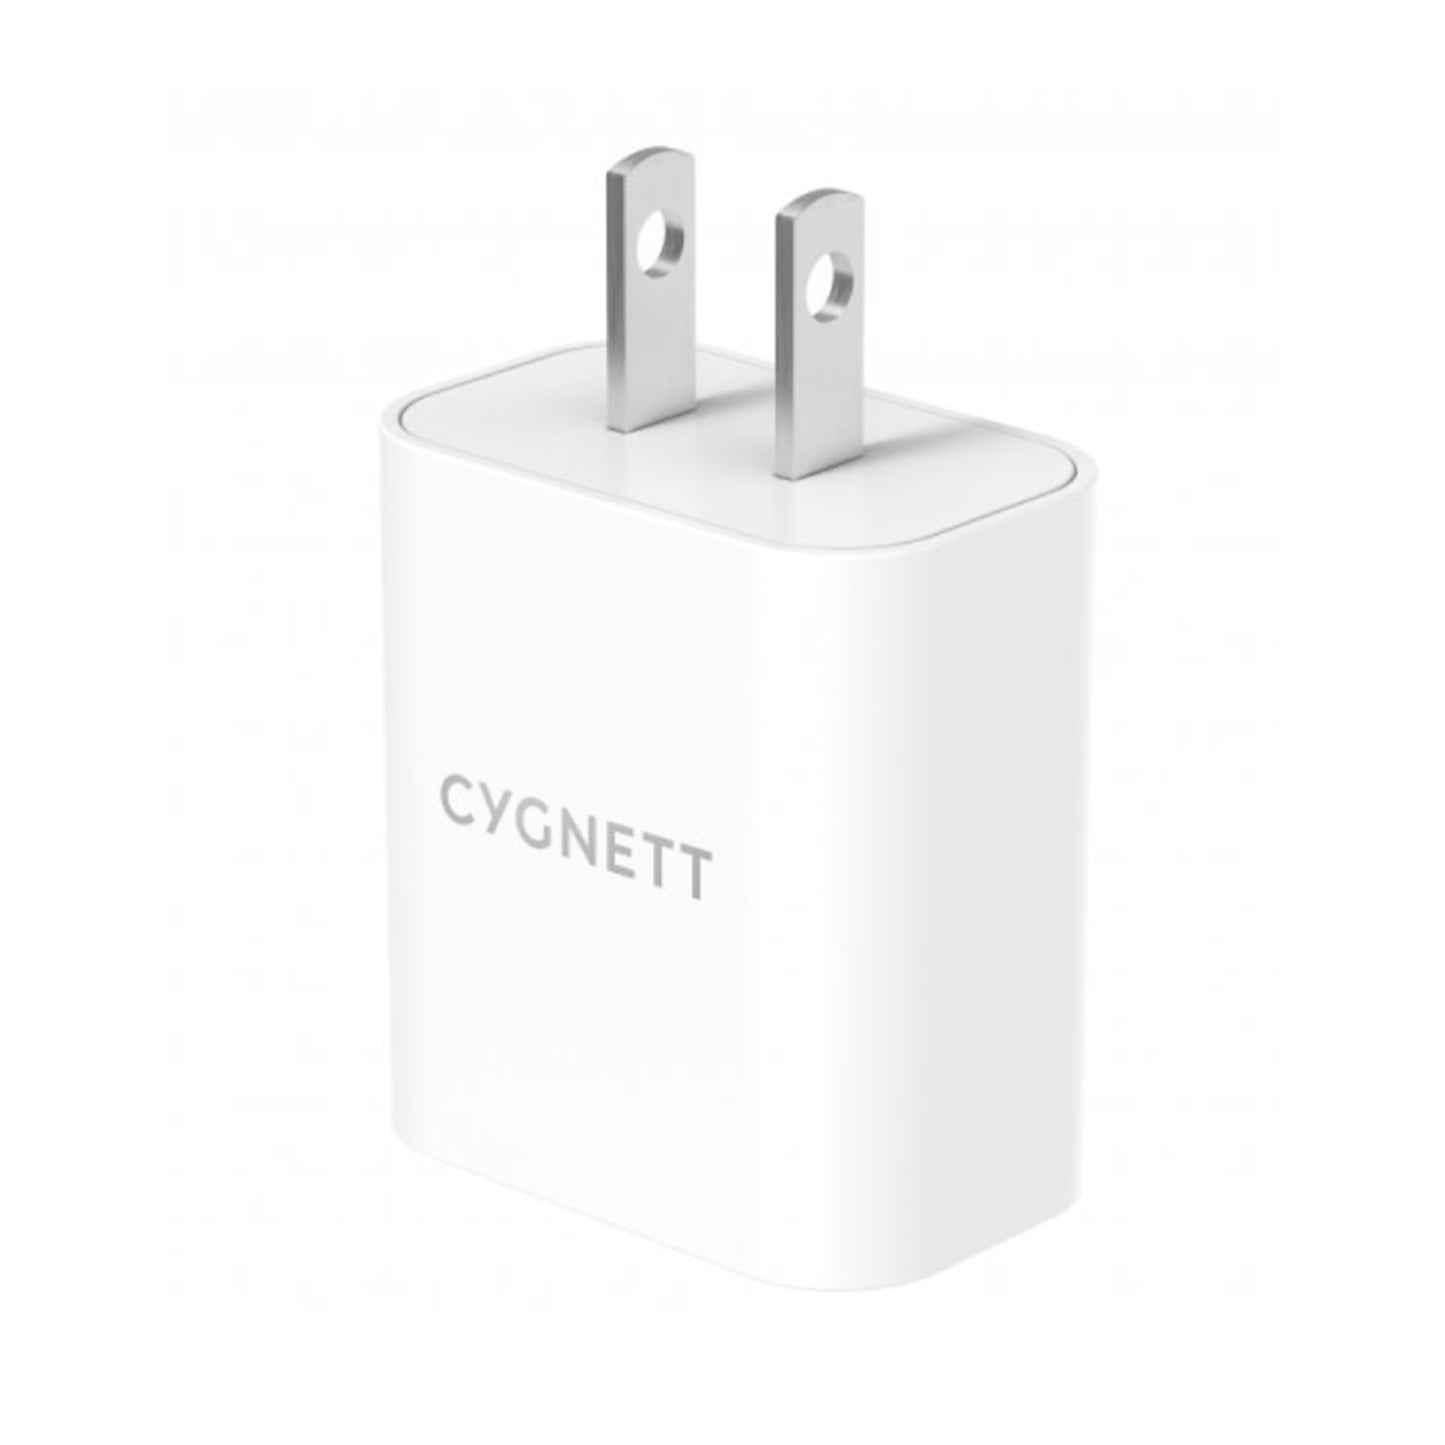 CYGNETT PowerPlus 20W USB-C Wall Charger - White